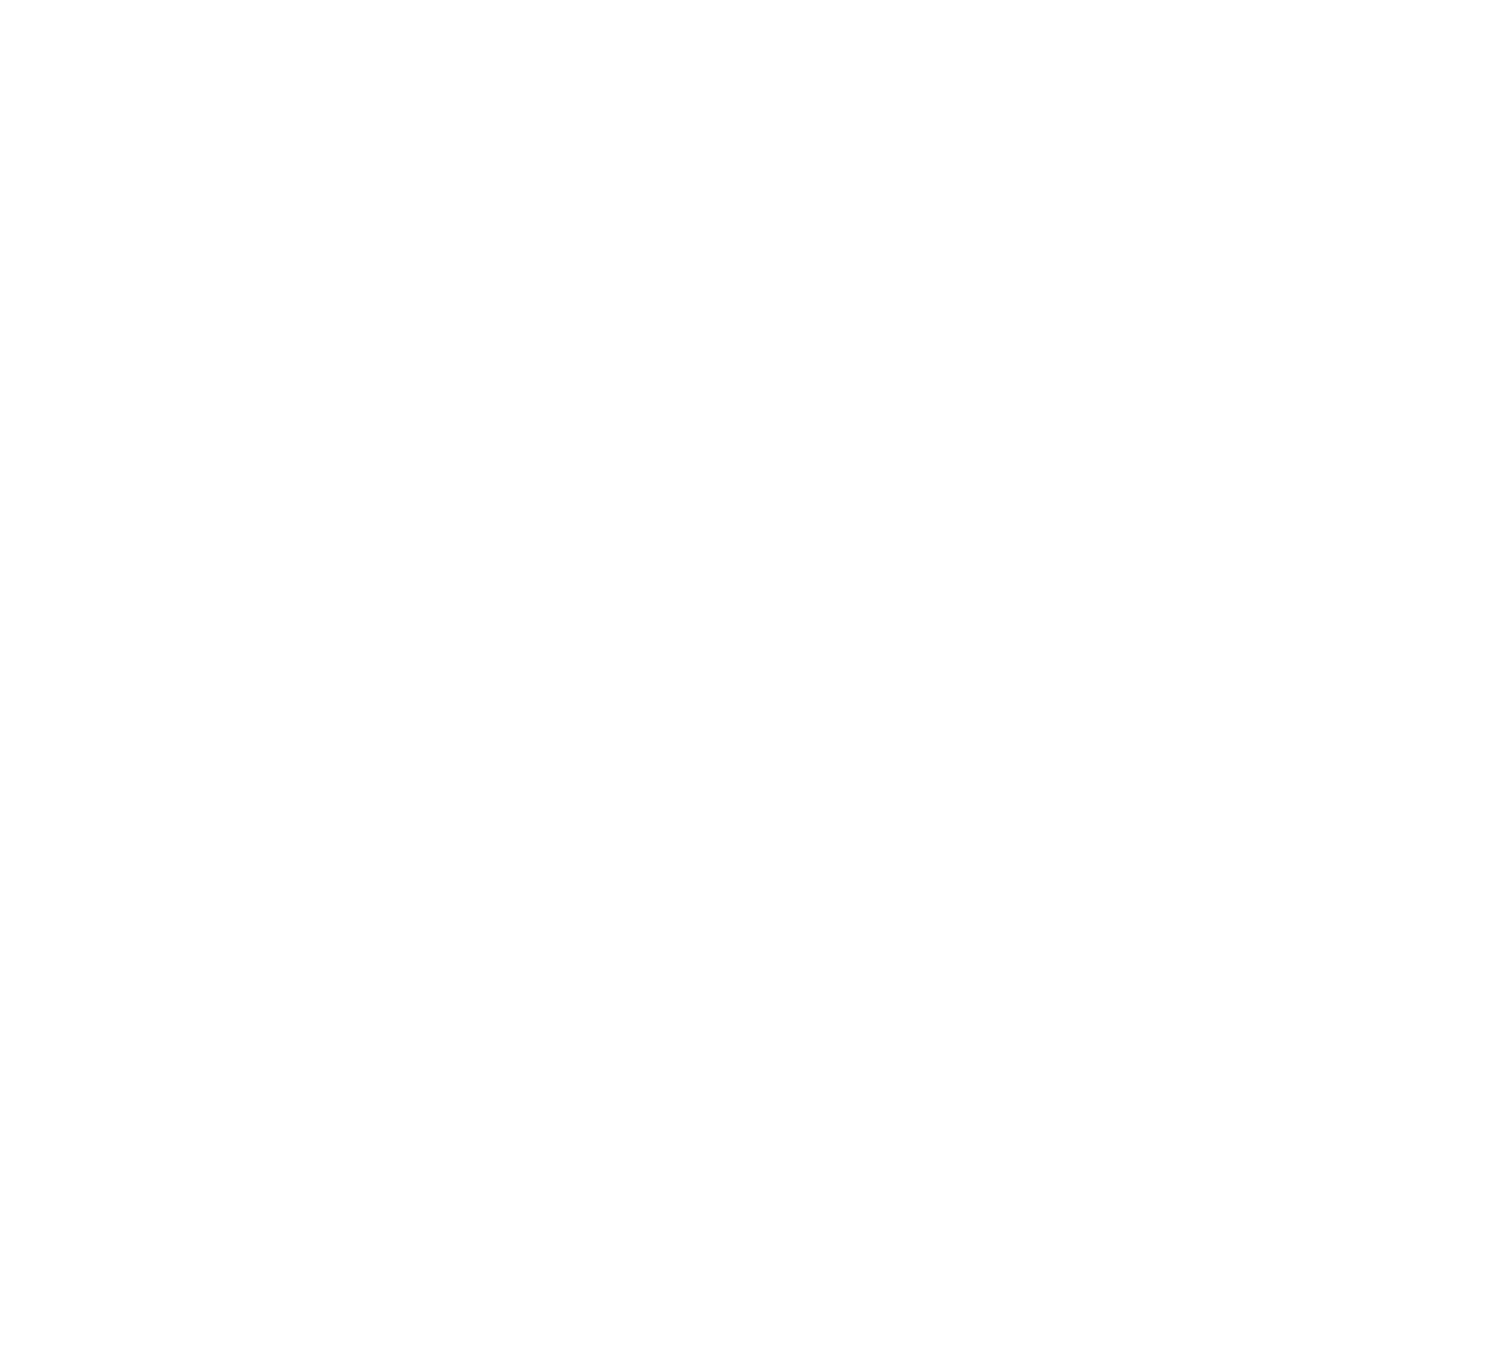 Anastasia Golub Design